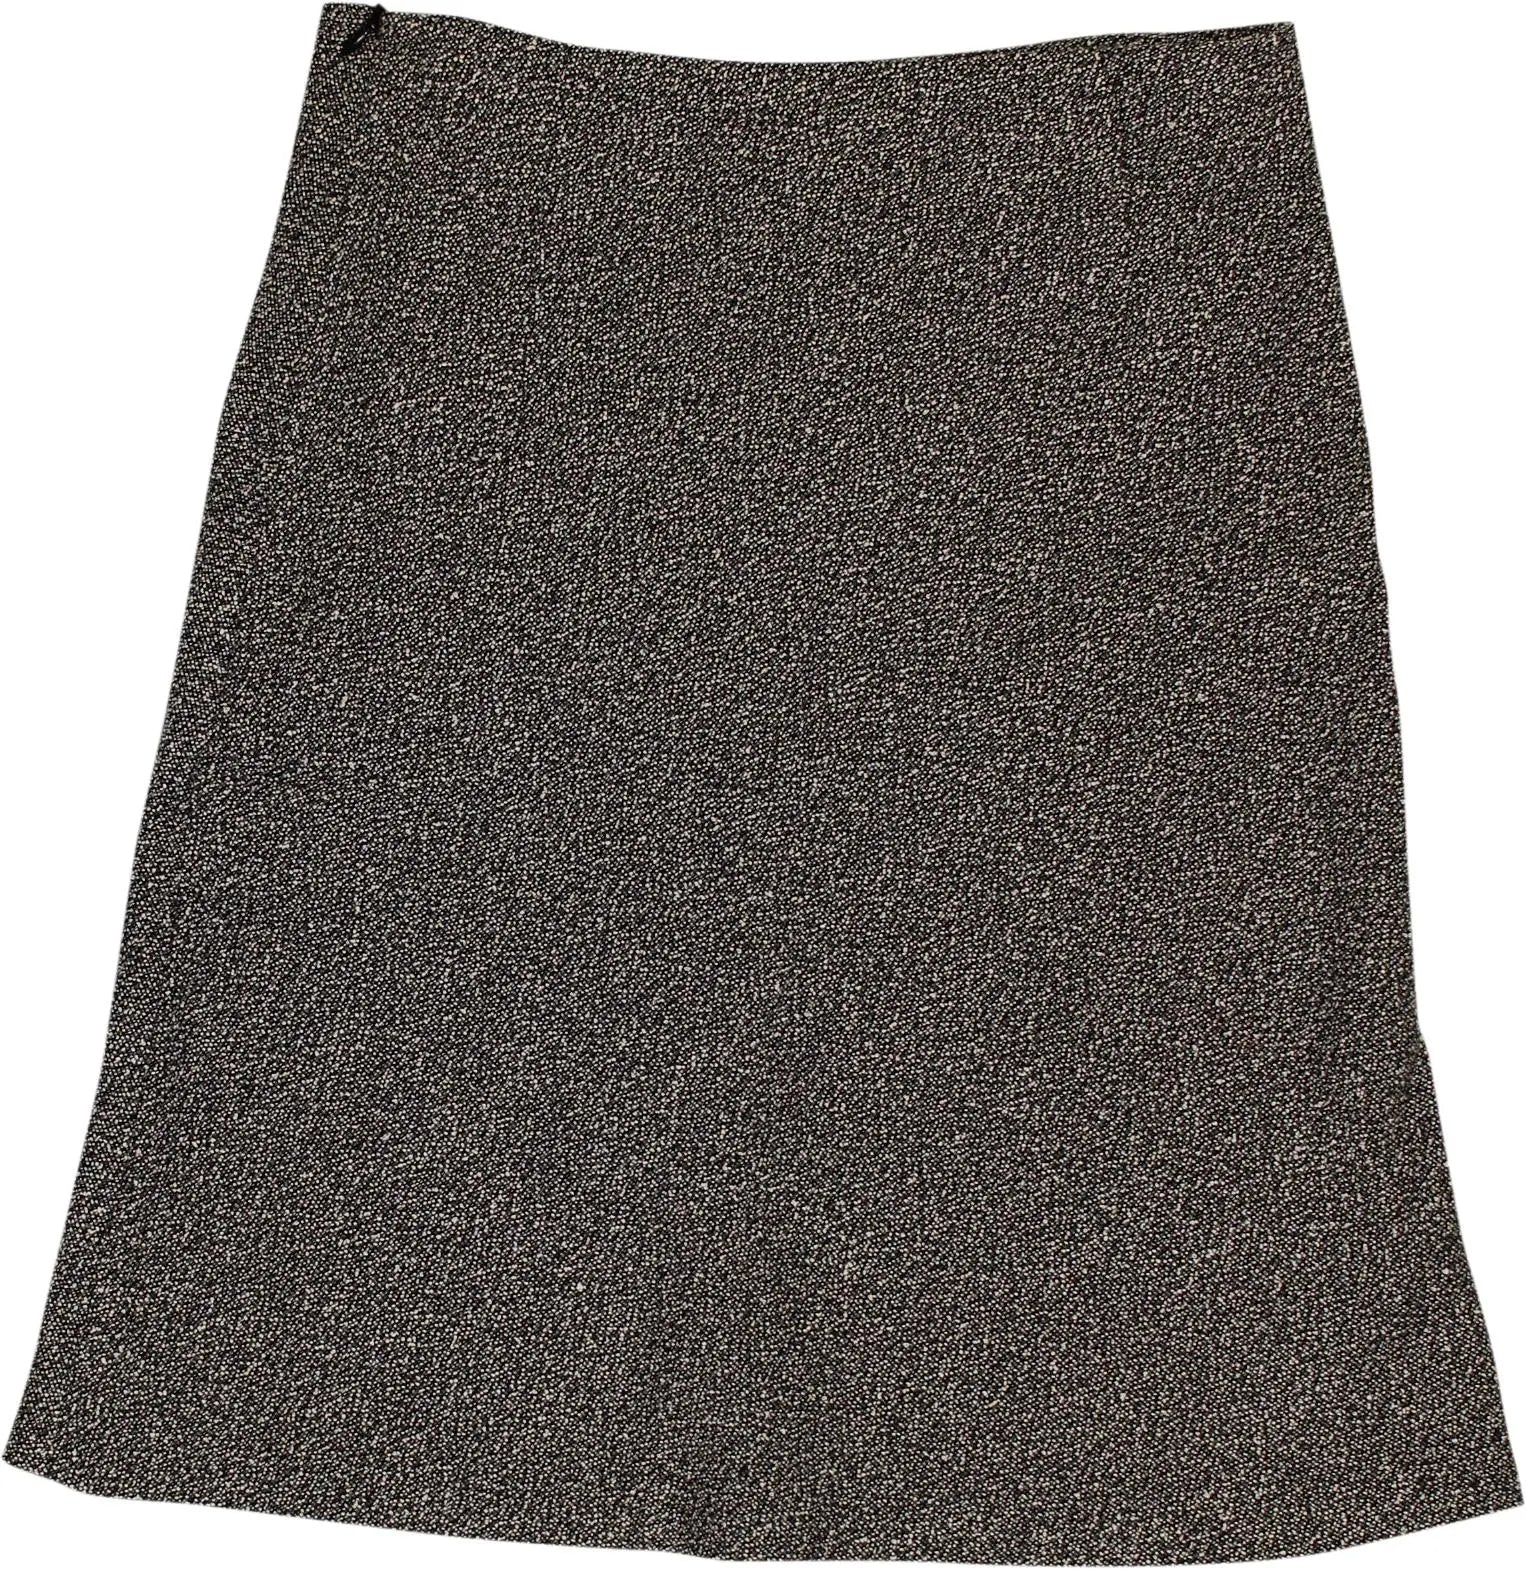 Jennyfer - Tweed Skirt- ThriftTale.com - Vintage and second handclothing